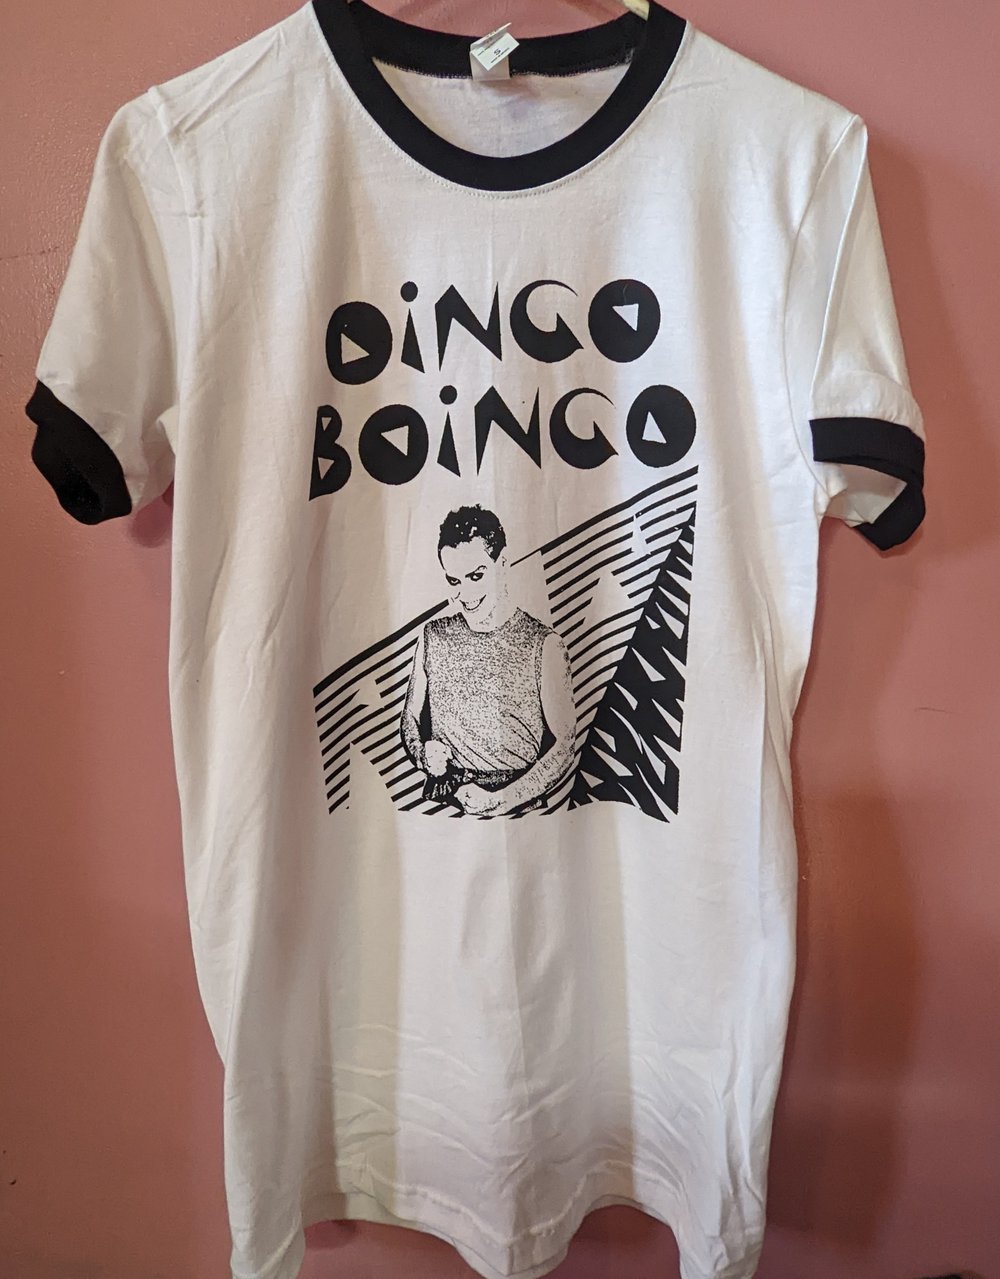 OINGO BOINGO